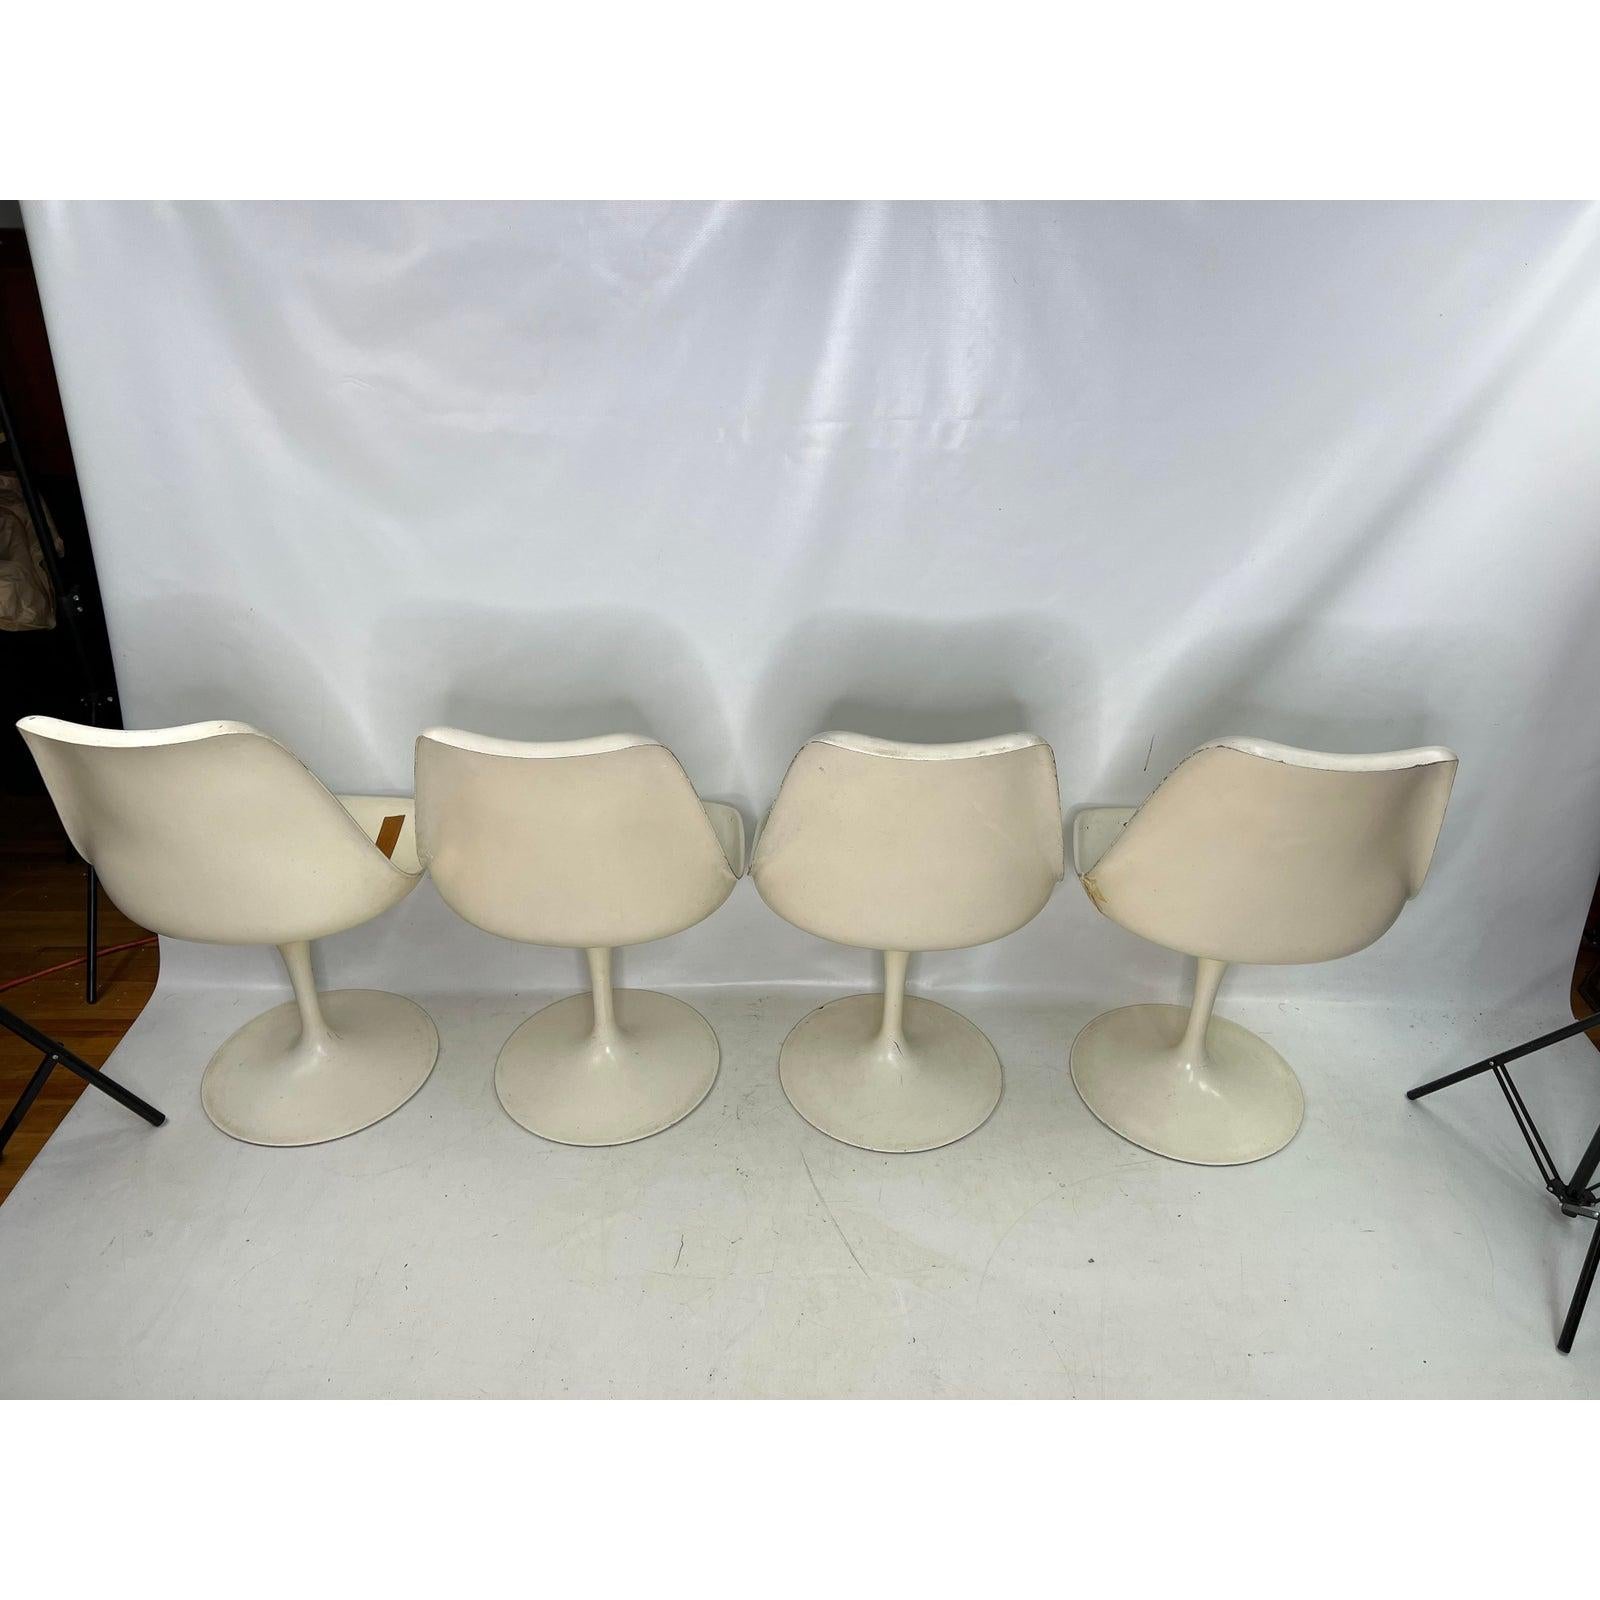 1970s Saarinen Tulip chairs by Knoll, set of 4.